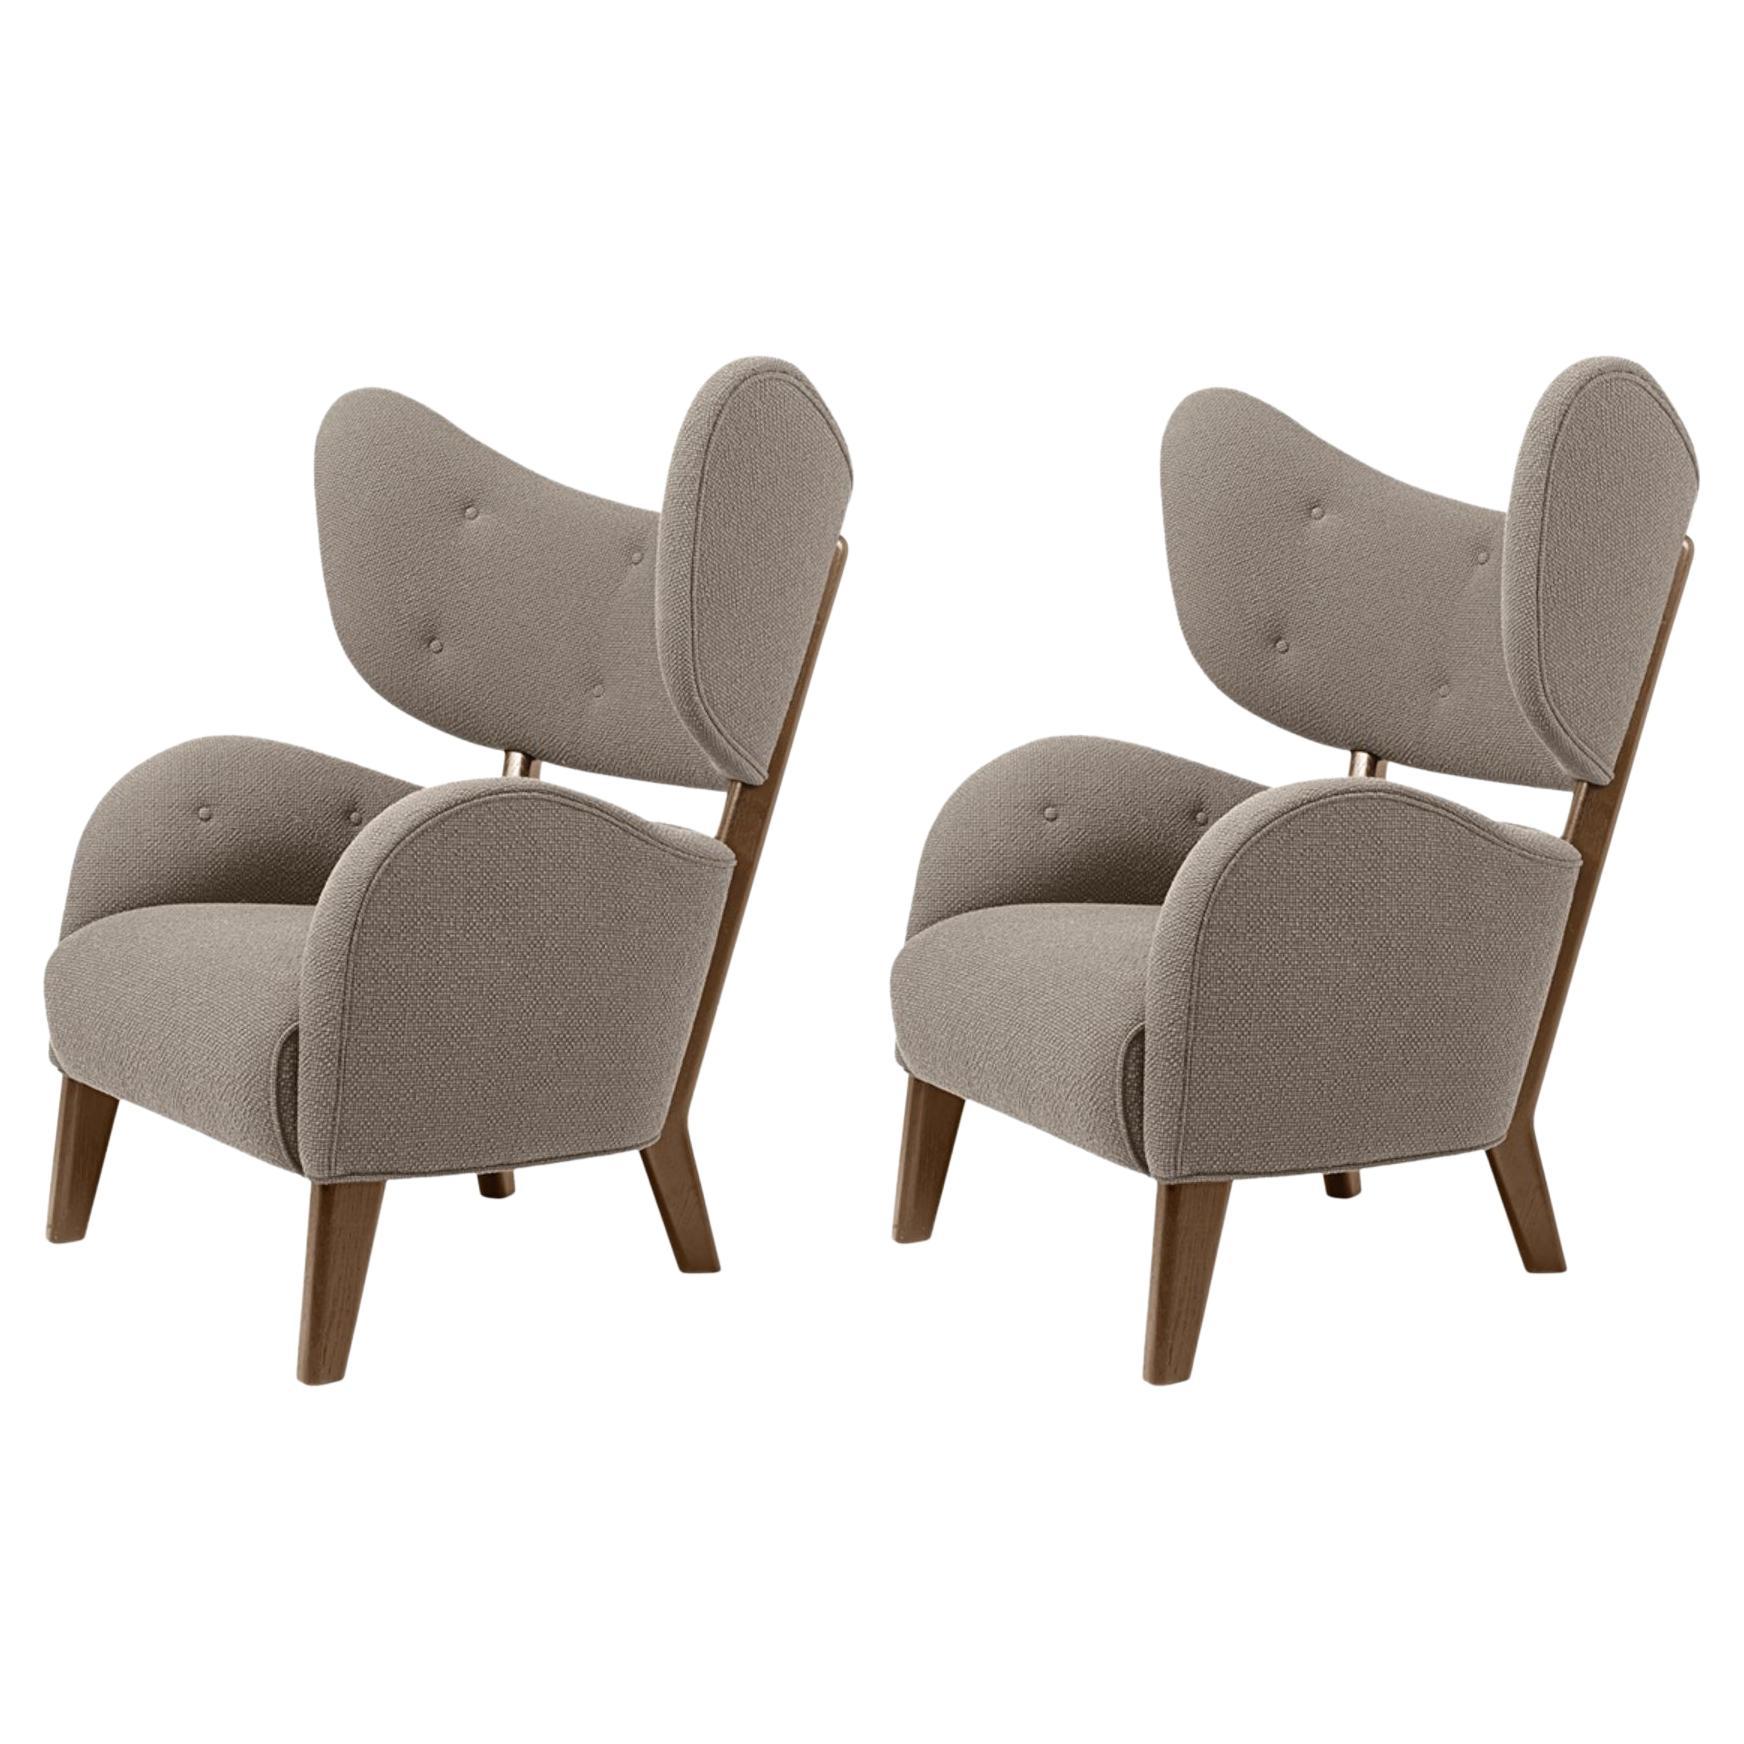 Set of 2 Beige Raf Simons Vidar 3 Smoked Oak My Own Chair Lounge Chair by Lassen For Sale